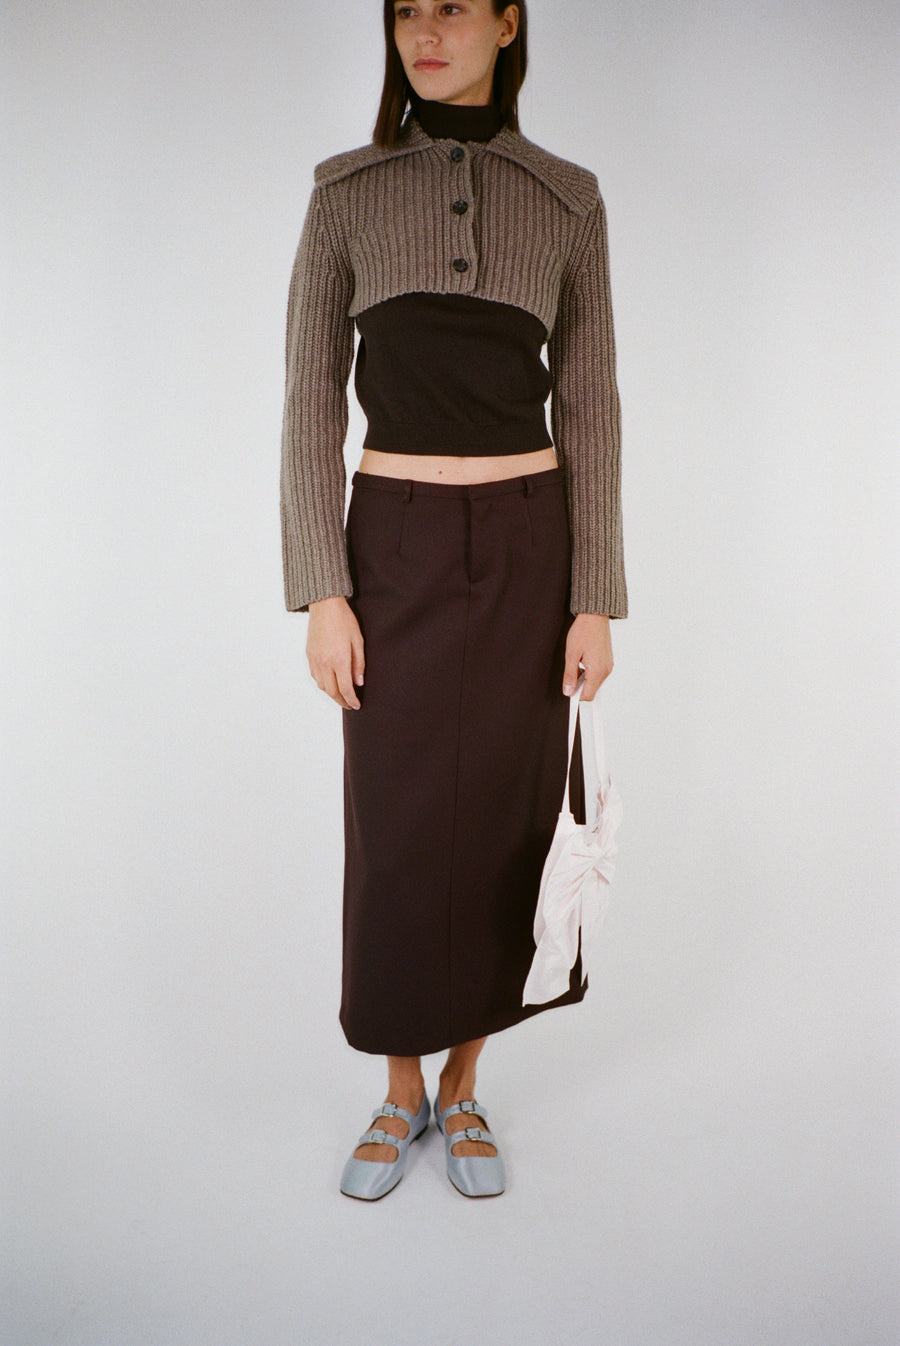 Midi length skirt in brunette brown suiting fabric on model